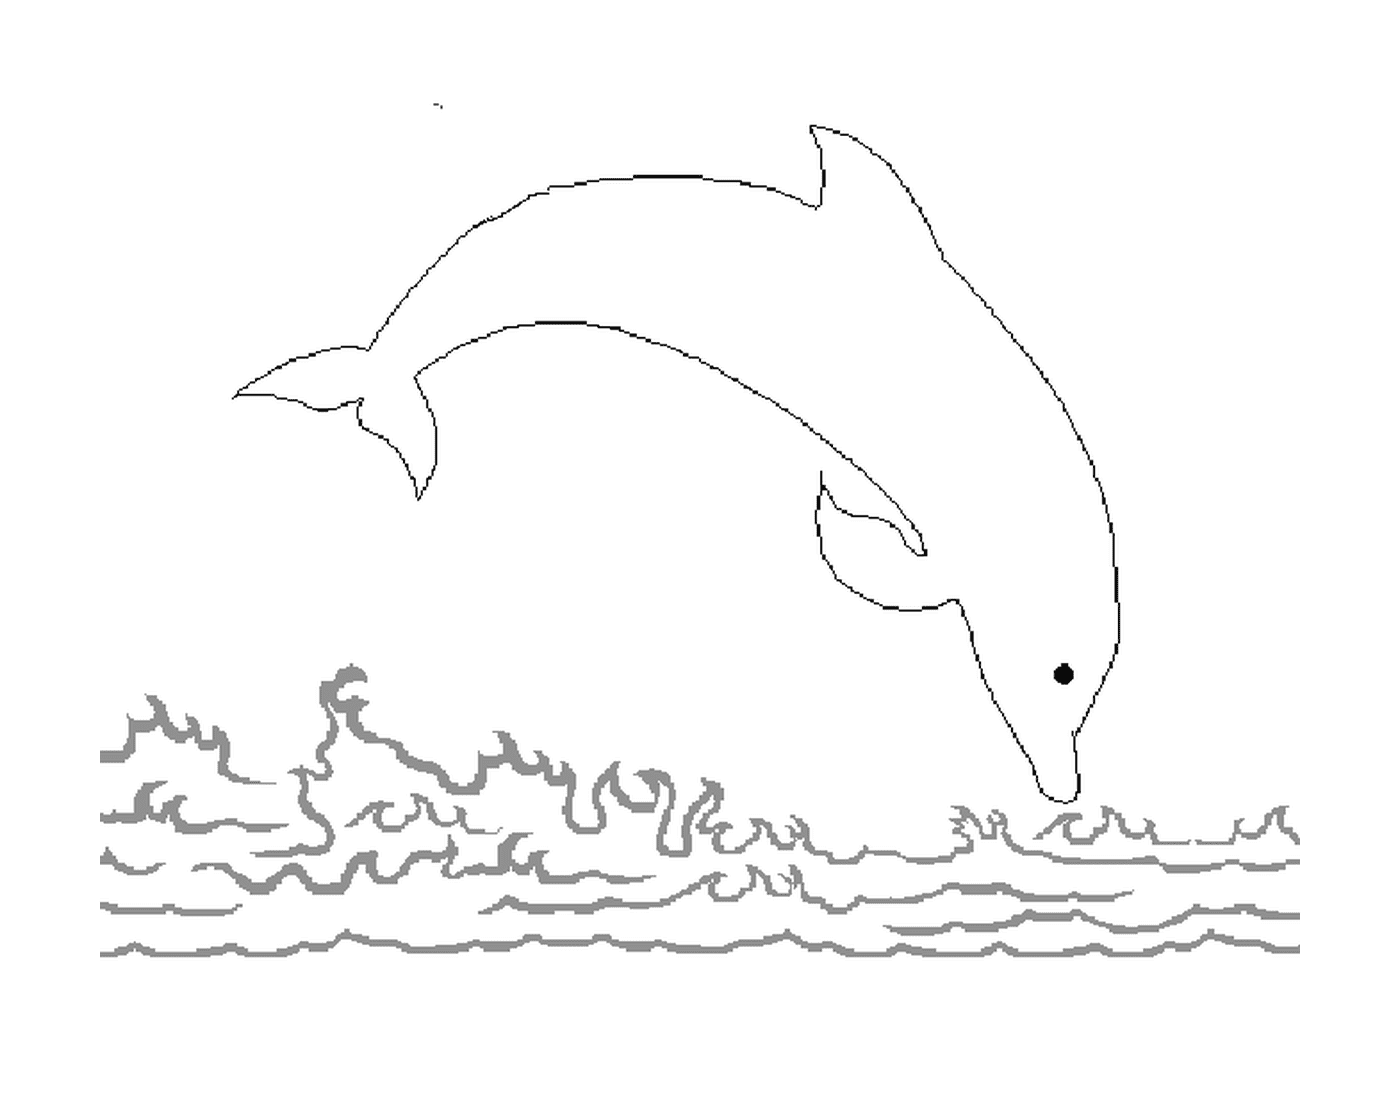 saut d un dauphin